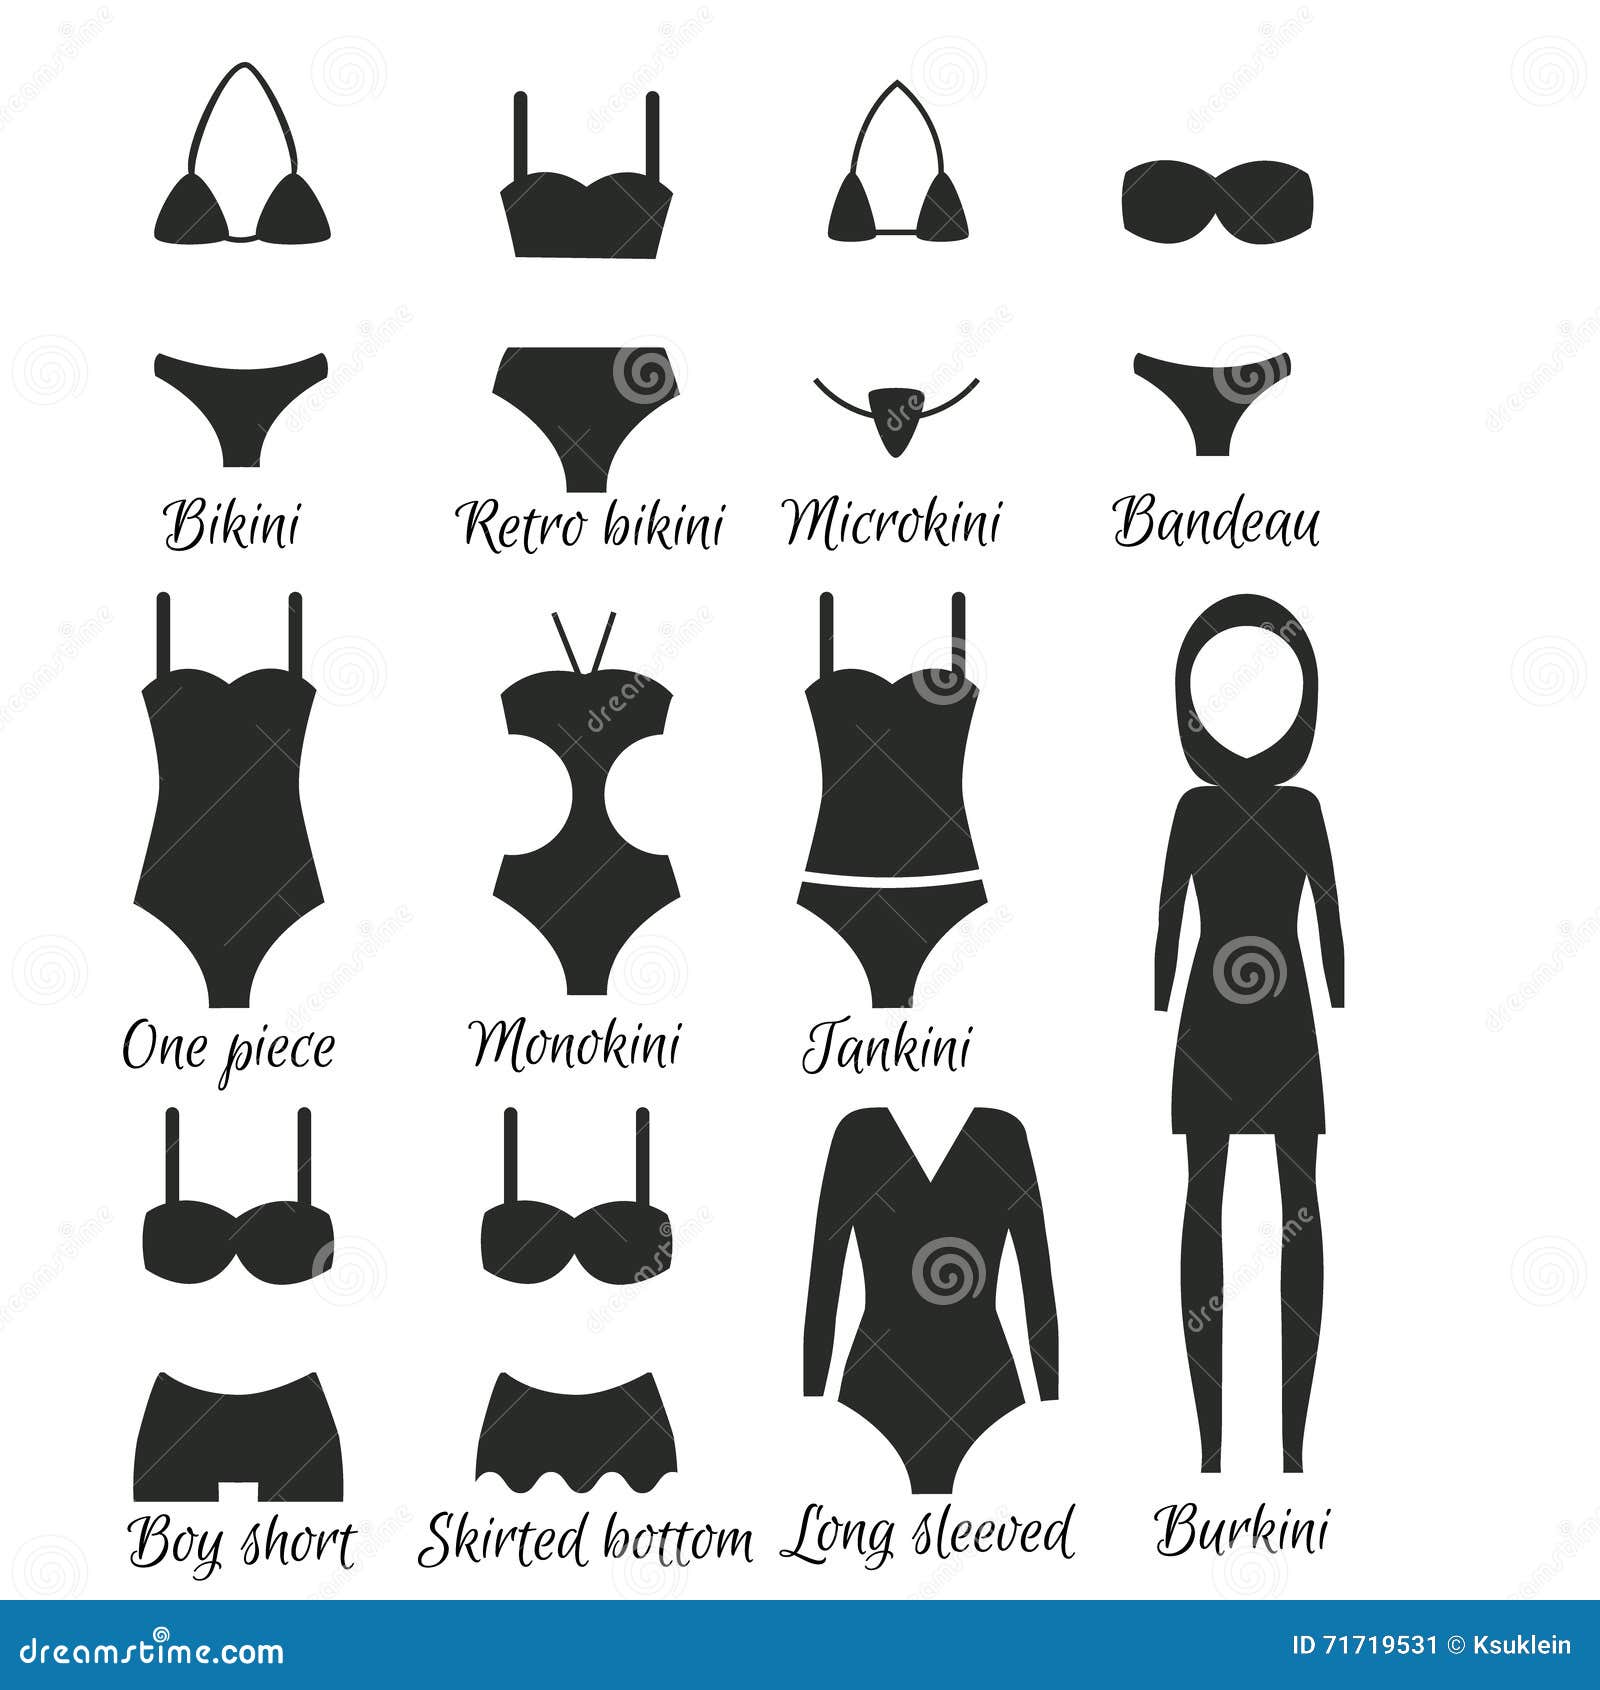 Swimsuits models for women stock vector. Illustration of shopping ...